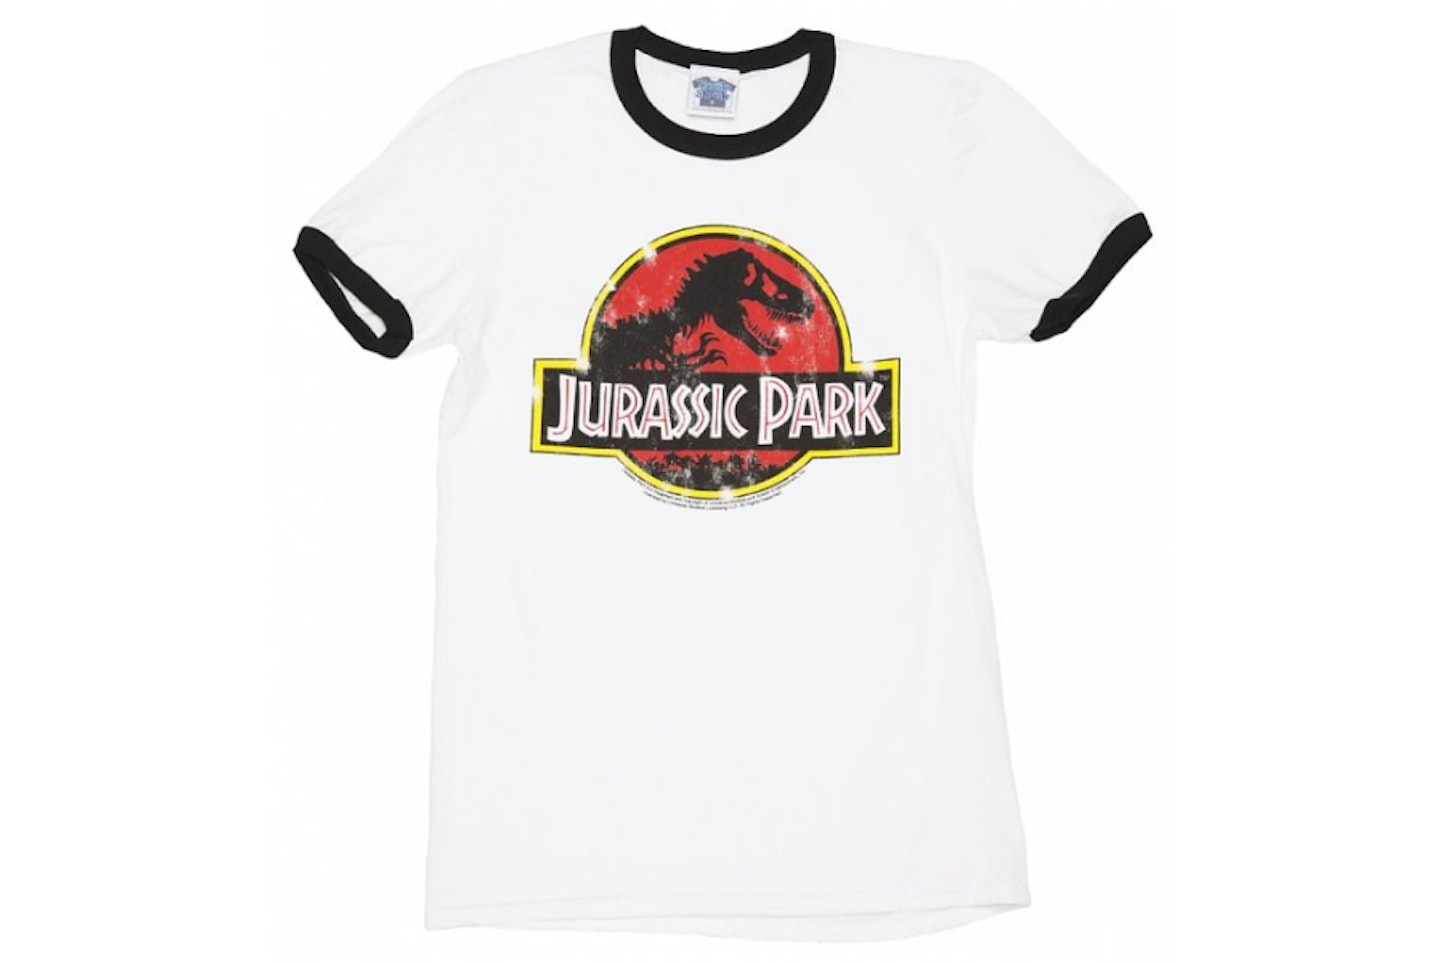 Park Logo - Jurassic Park, 1993